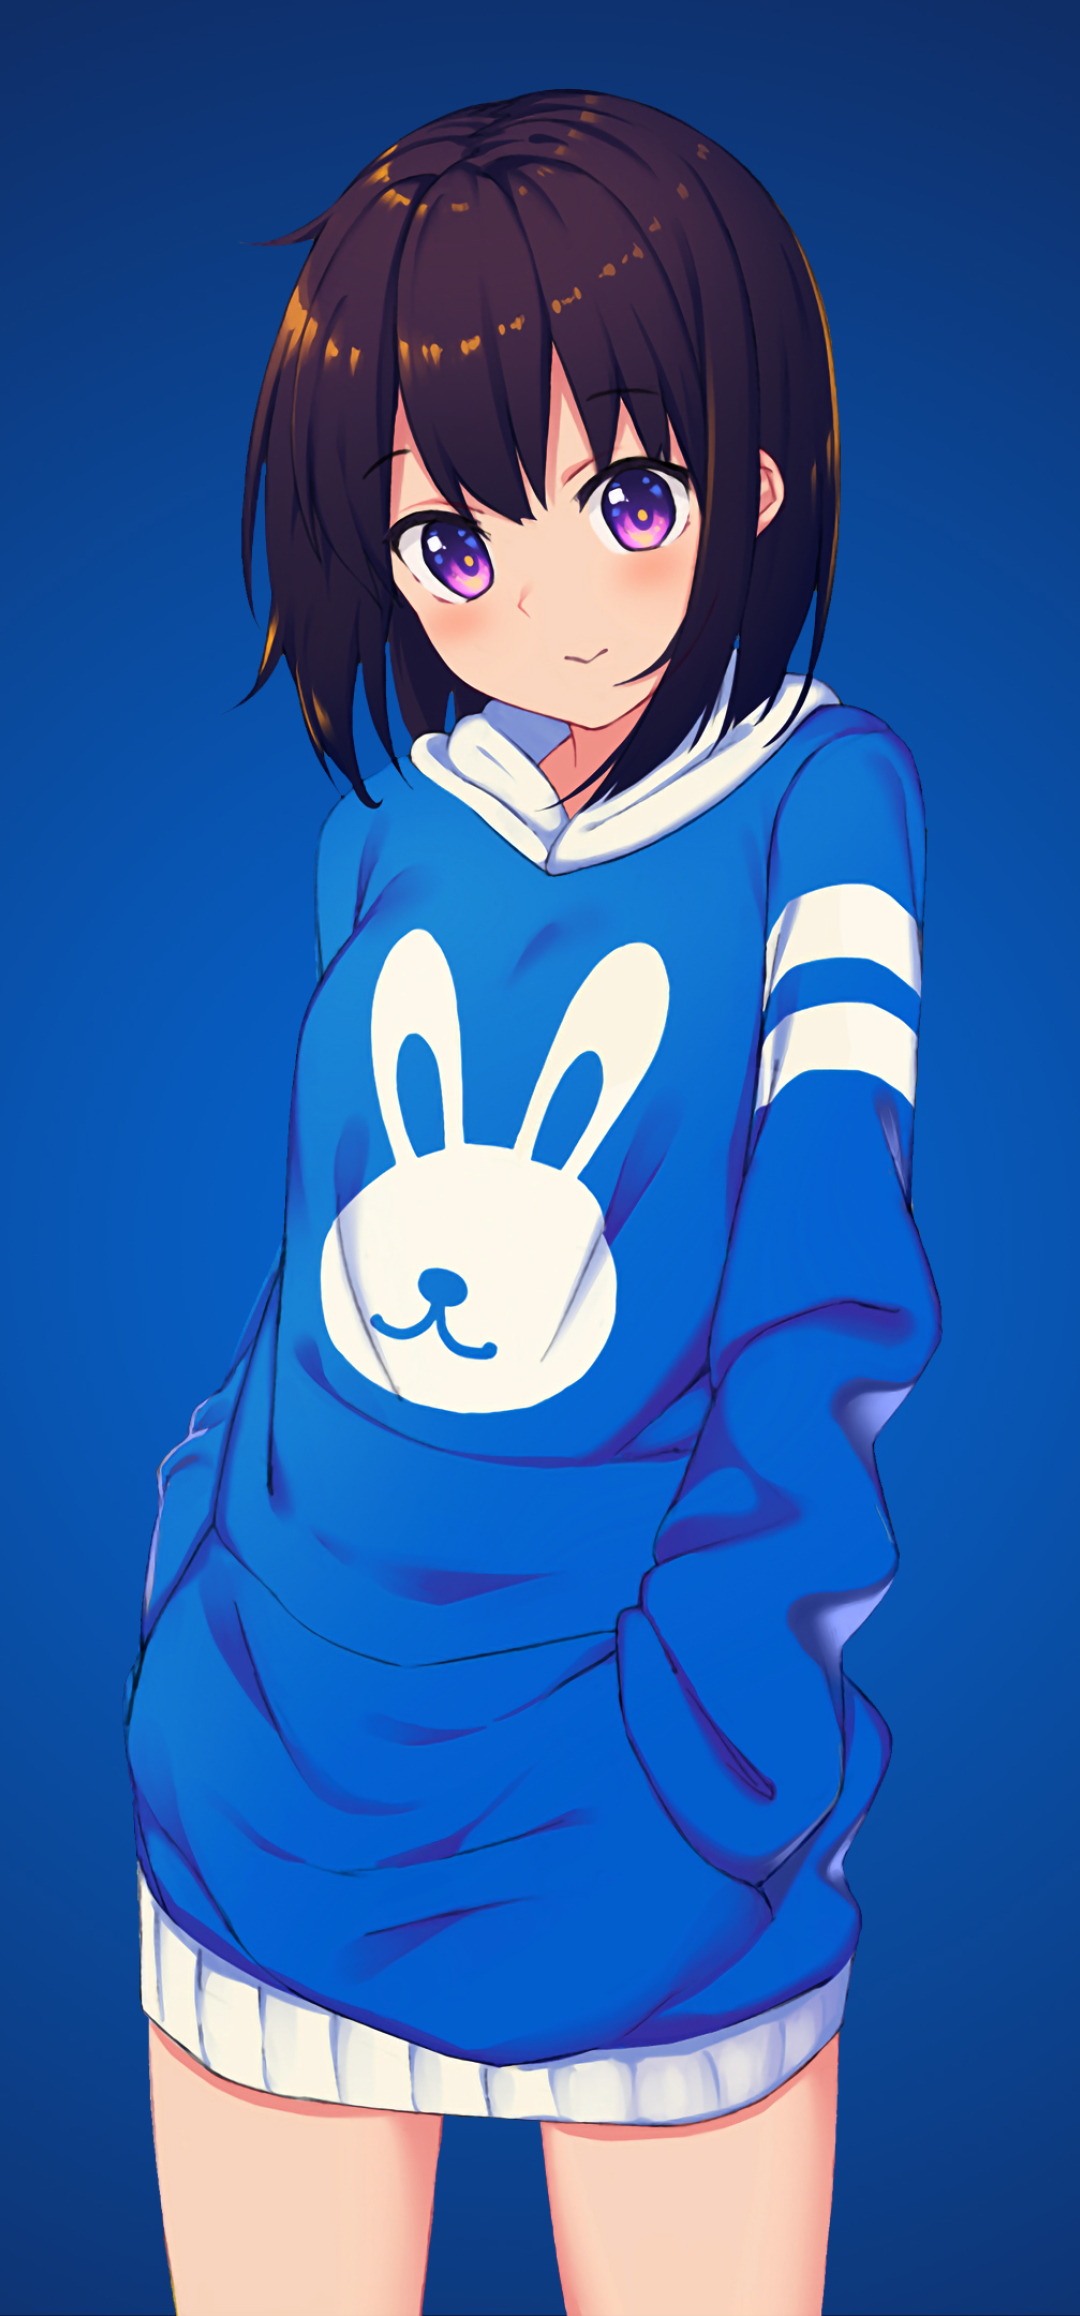 1080x2316 Resolution Bunny Anime Girl 1080x2316 Resolution Wallpaper ...